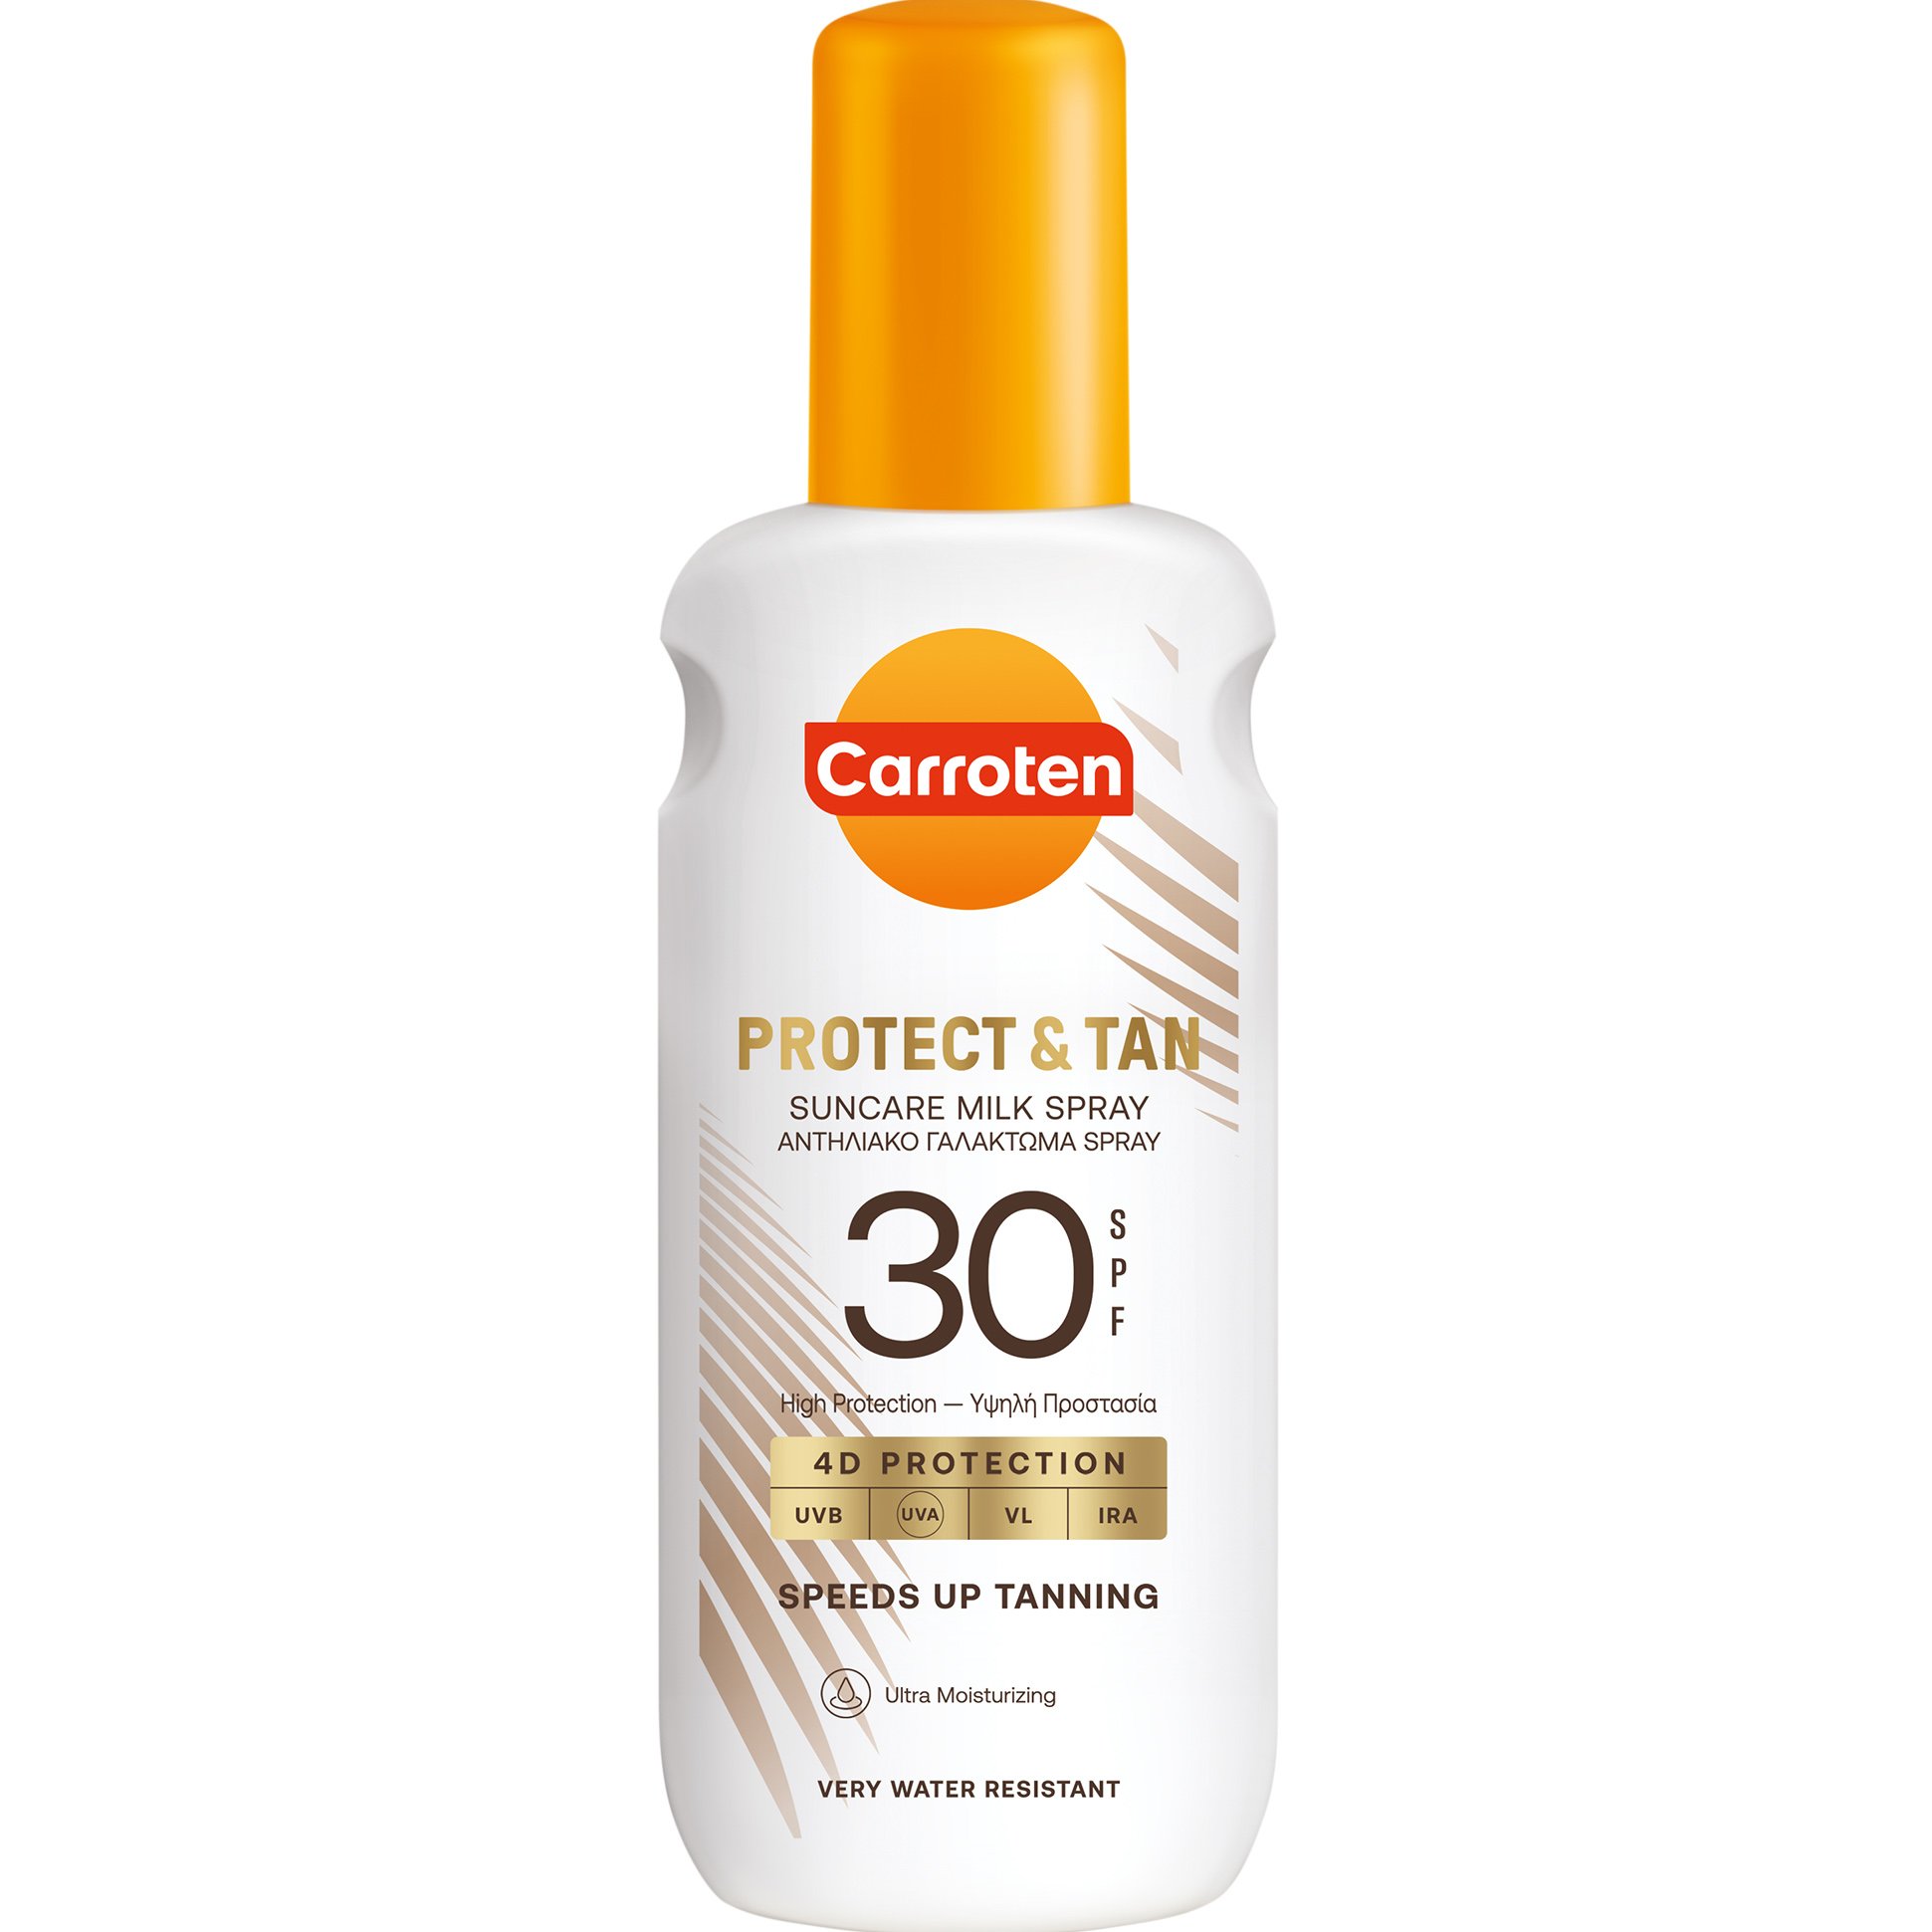 Carroten Carroten Protect & Tan Suncare Milk Spray Spf30 Αντηλιακό Γαλάκτωμα Σώματος Υψηλής Προστασίας που Επιταχύνει το Μαύρισμα 200ml